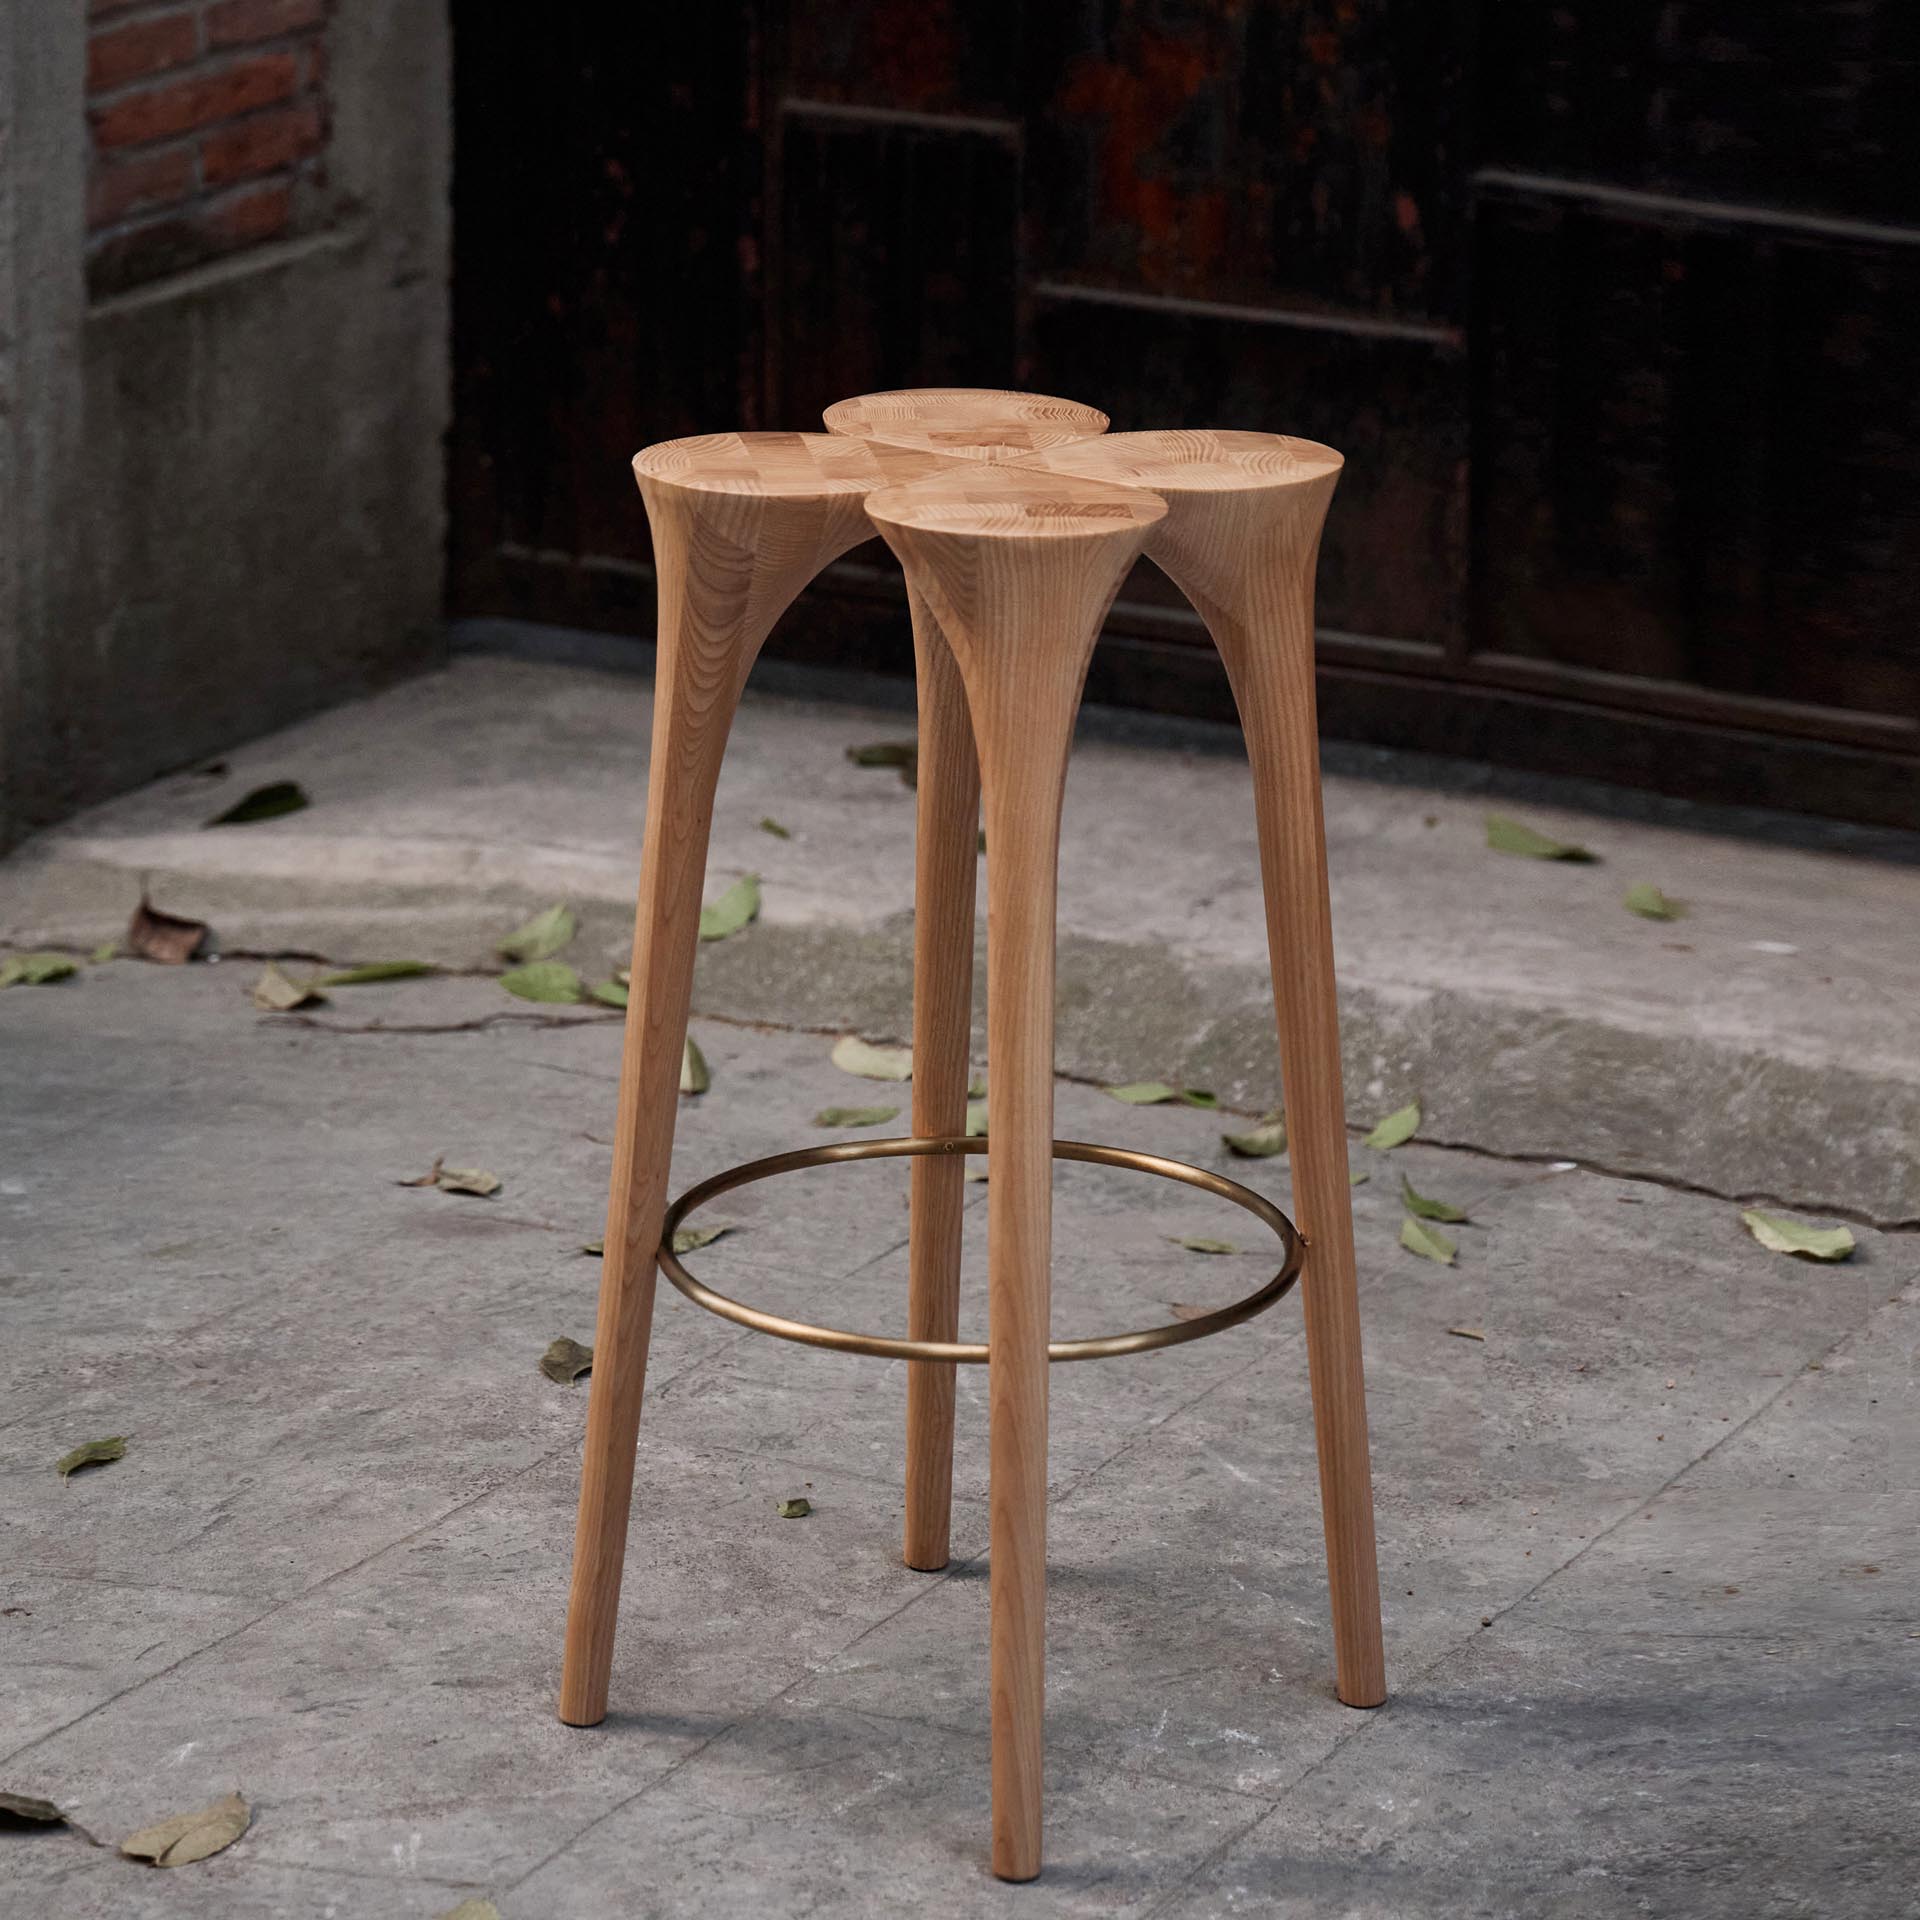 A modern wood stool design.